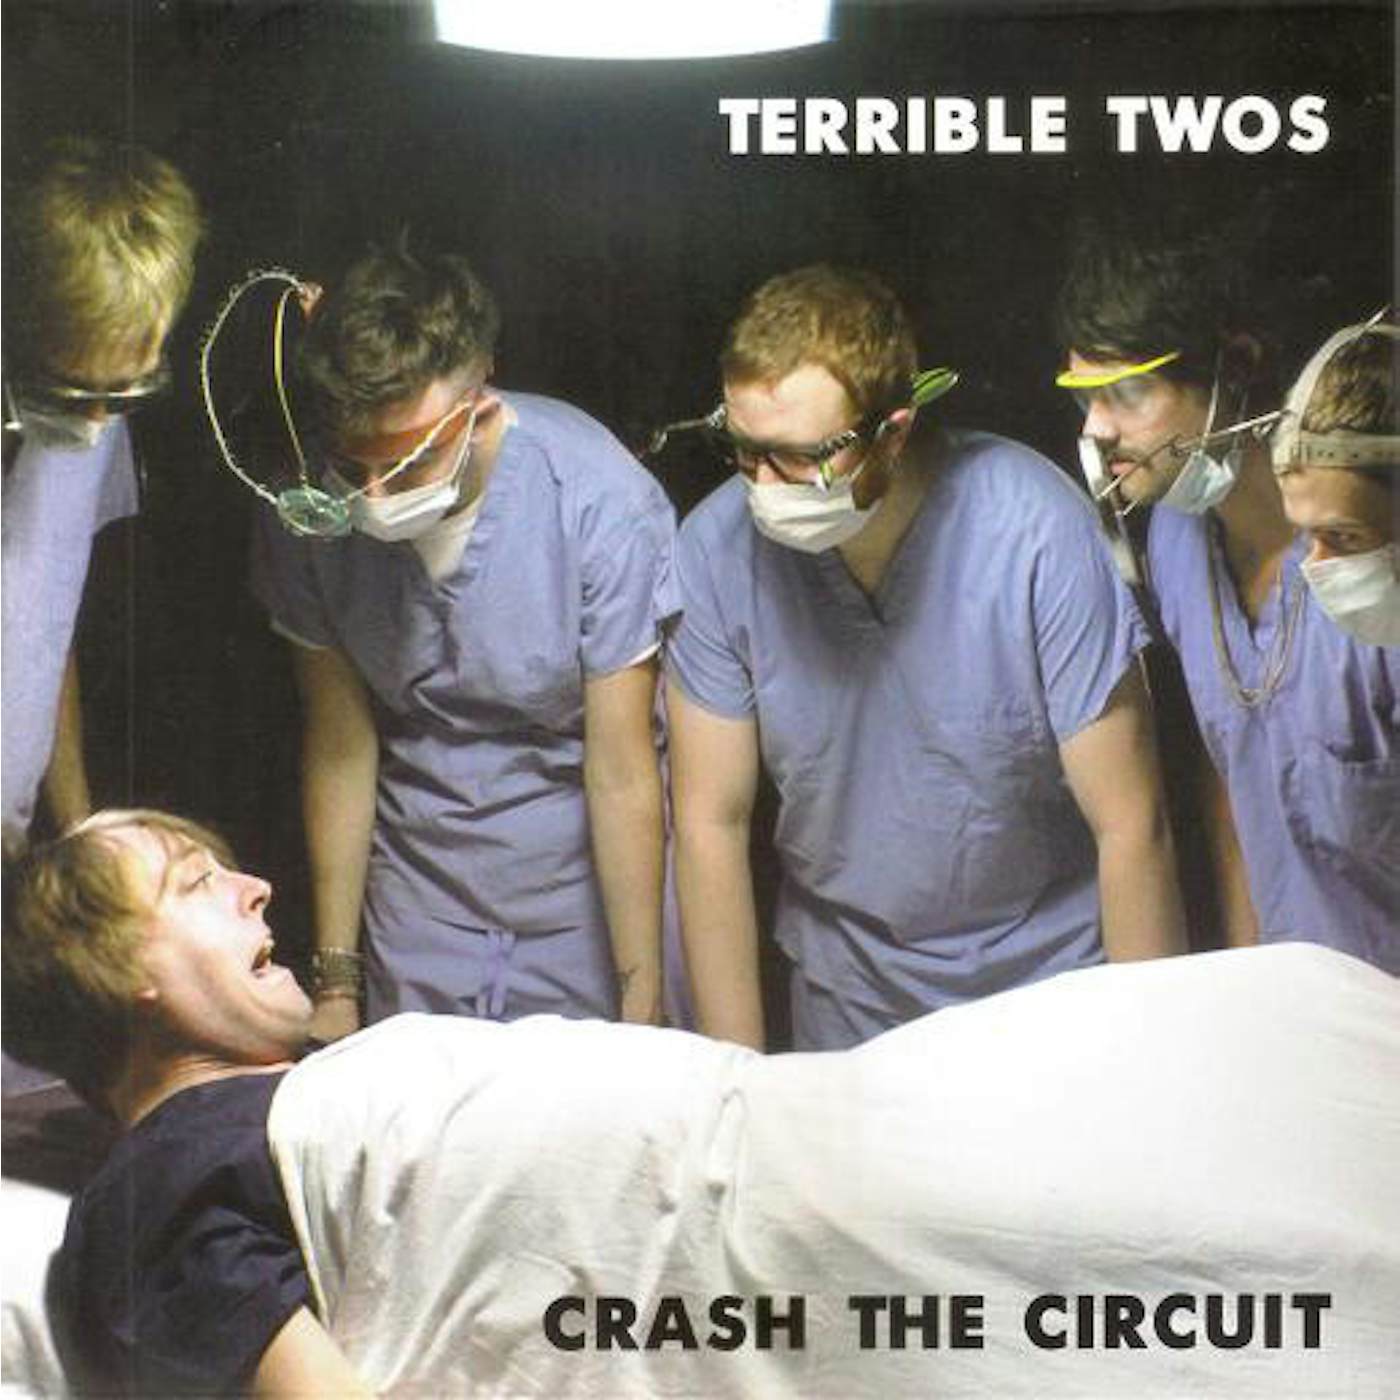 The Terrible Twos CRASH THE CIRCUIT Vinyl Record